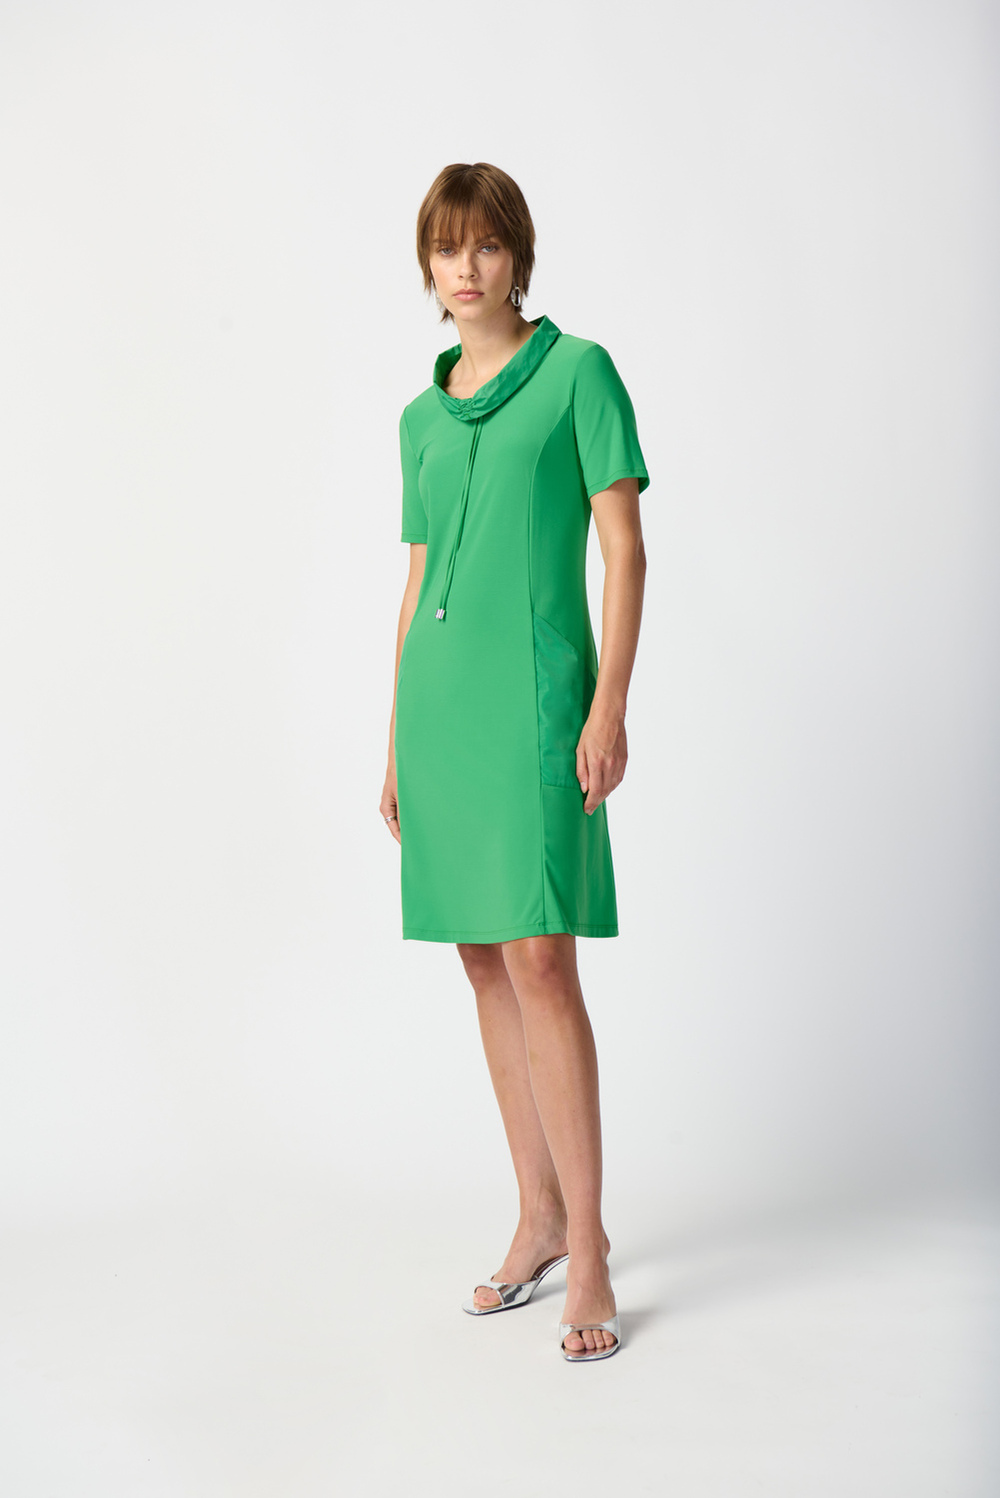 Drawstring Shirt Dress Style 231141. Island Green